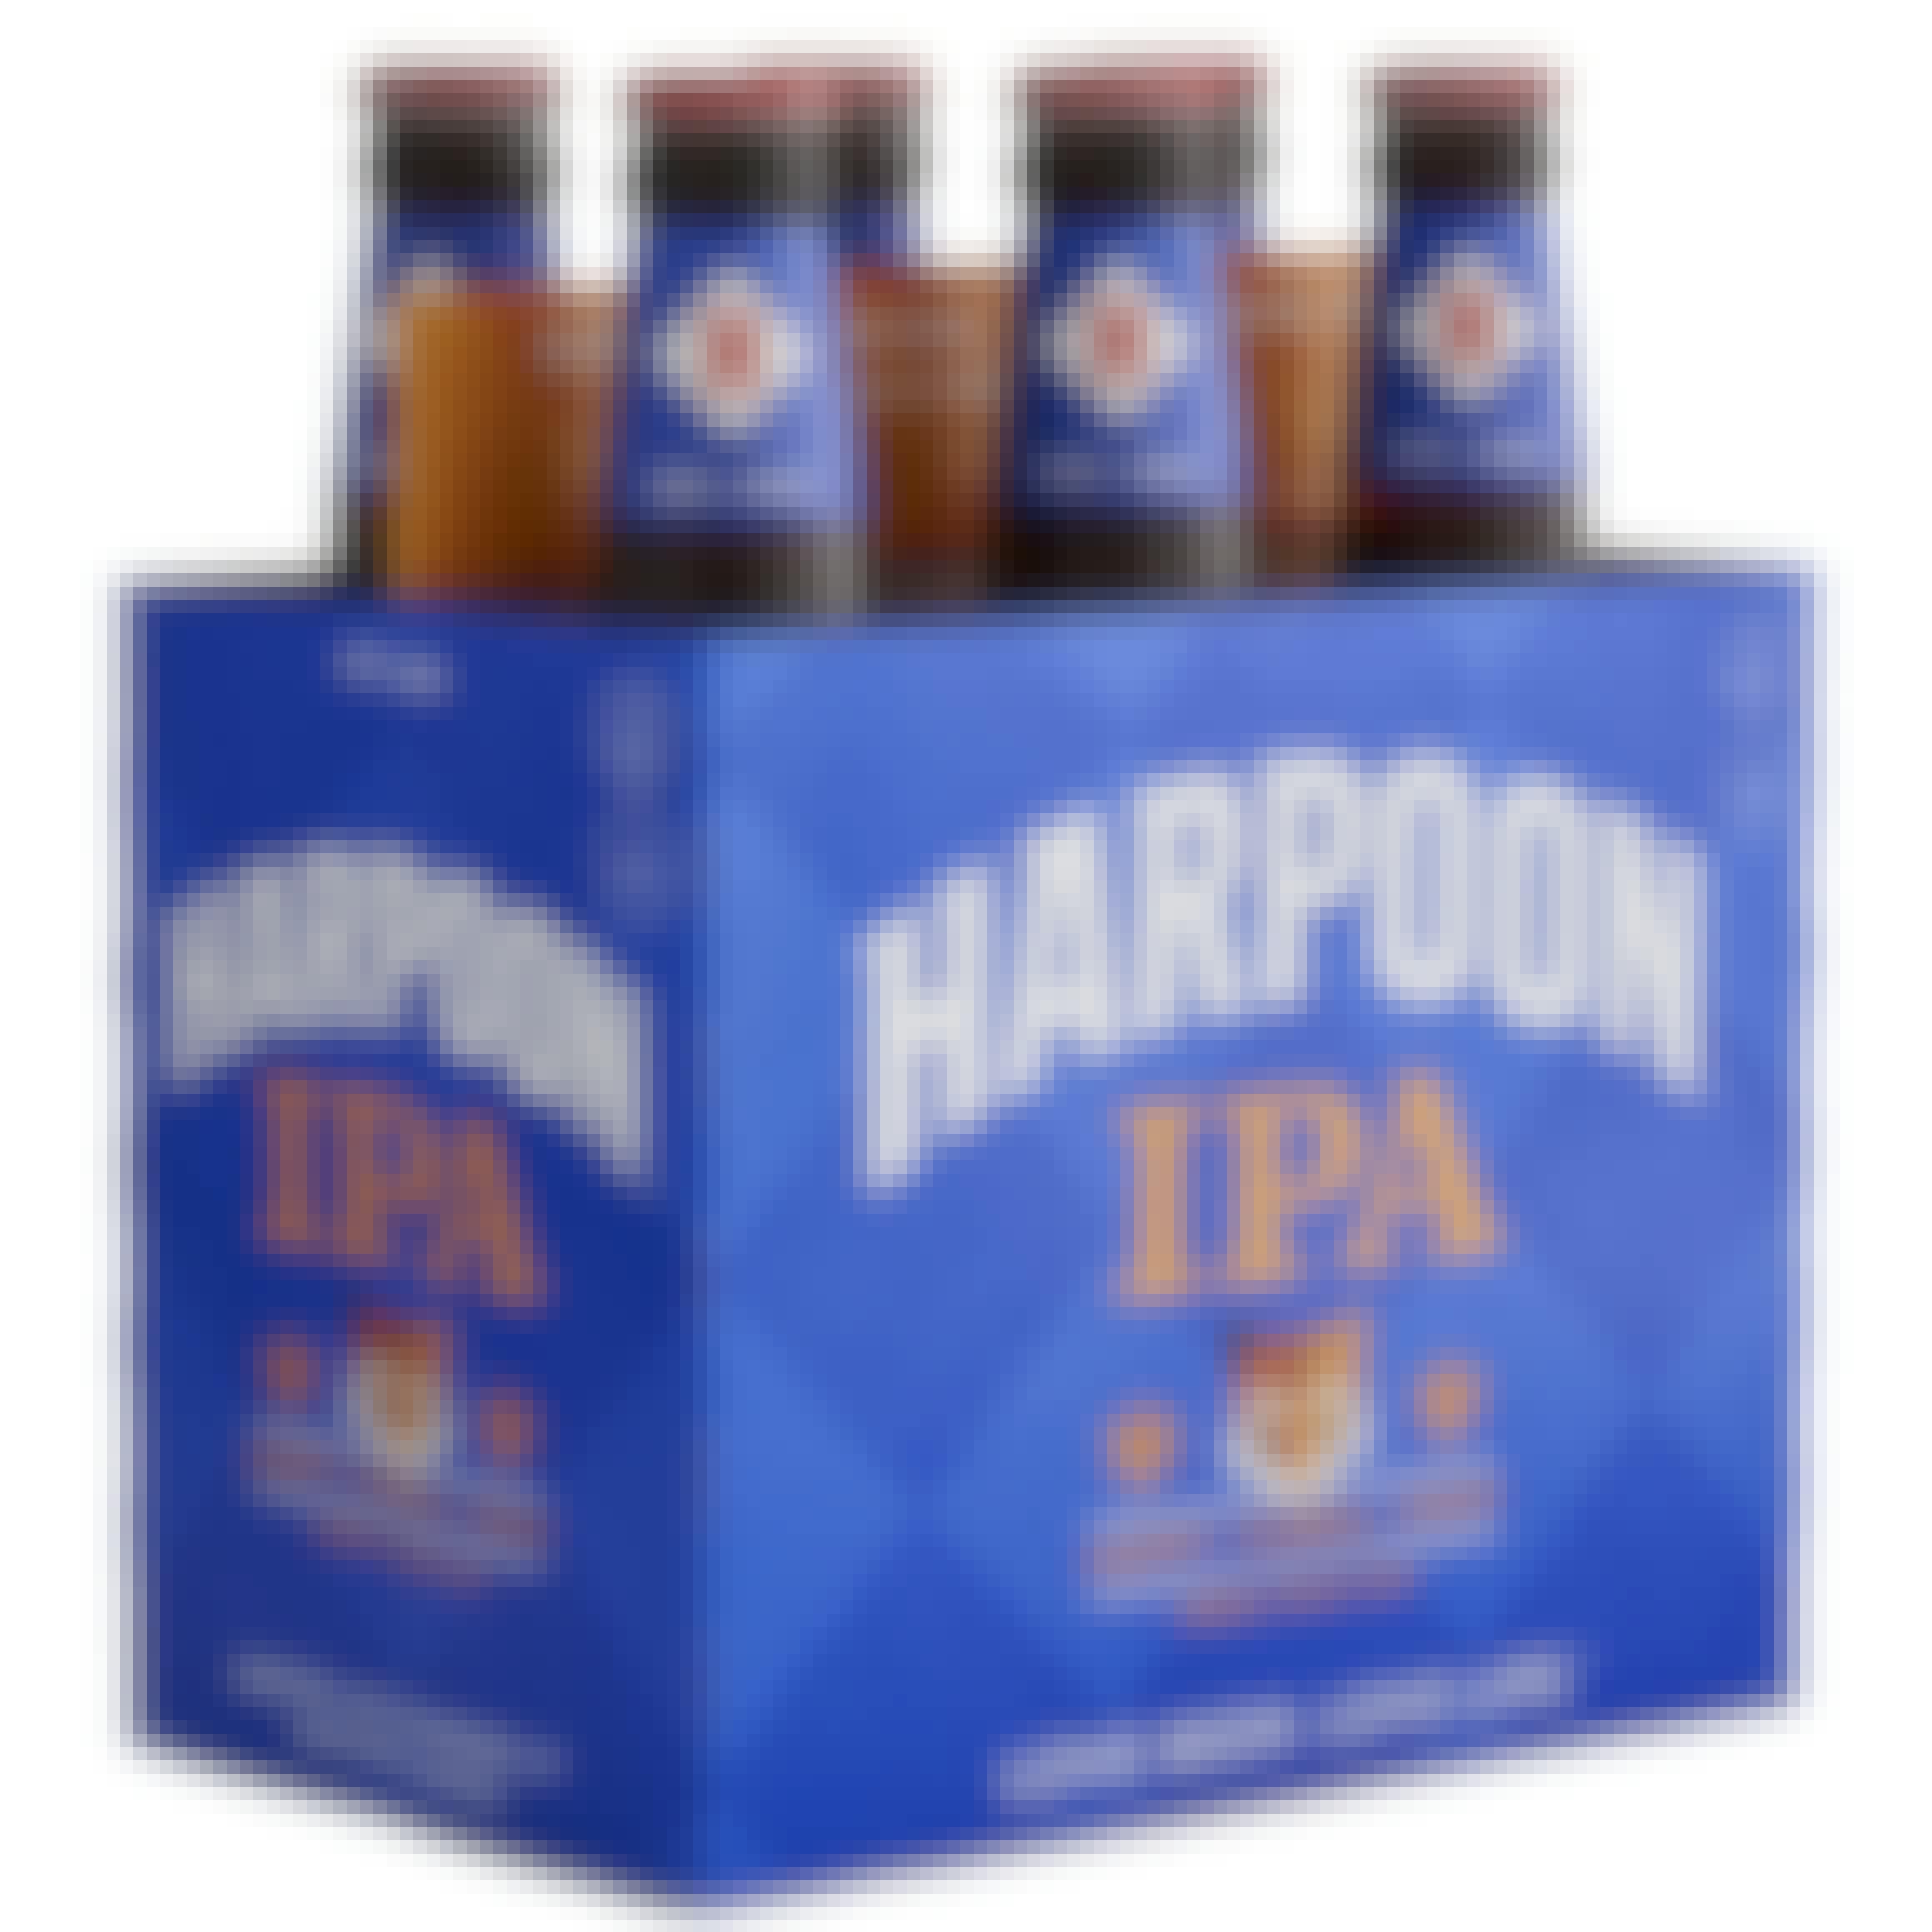 Harpoon Brewery IPA 6 pack 12 oz. Bottle